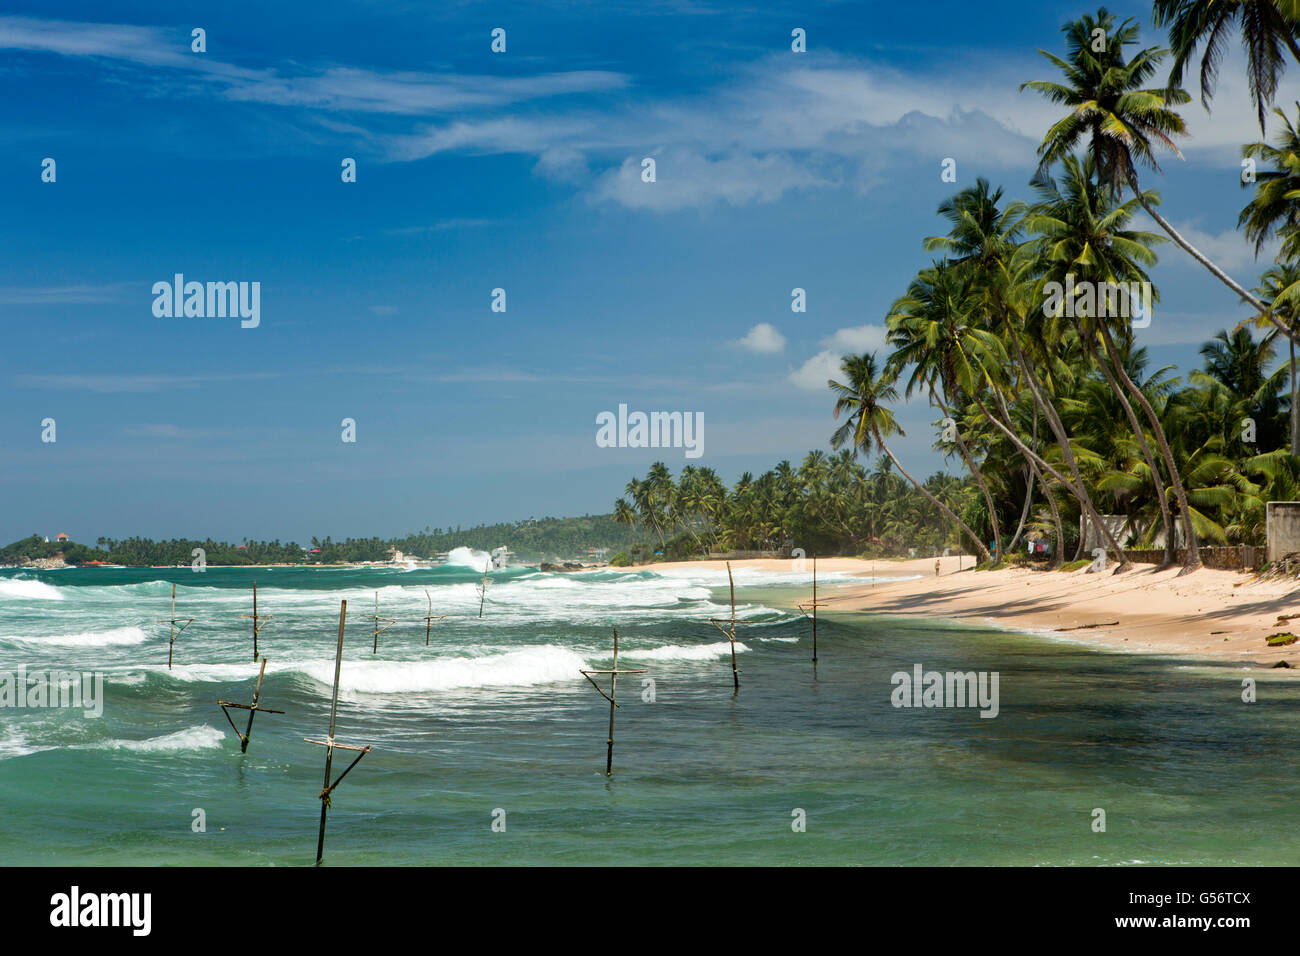 Sri Lanka, Galle Province, Unawatuna, Thalpe, Wijaya, stilt fishermen’s poles in water Stock Photo